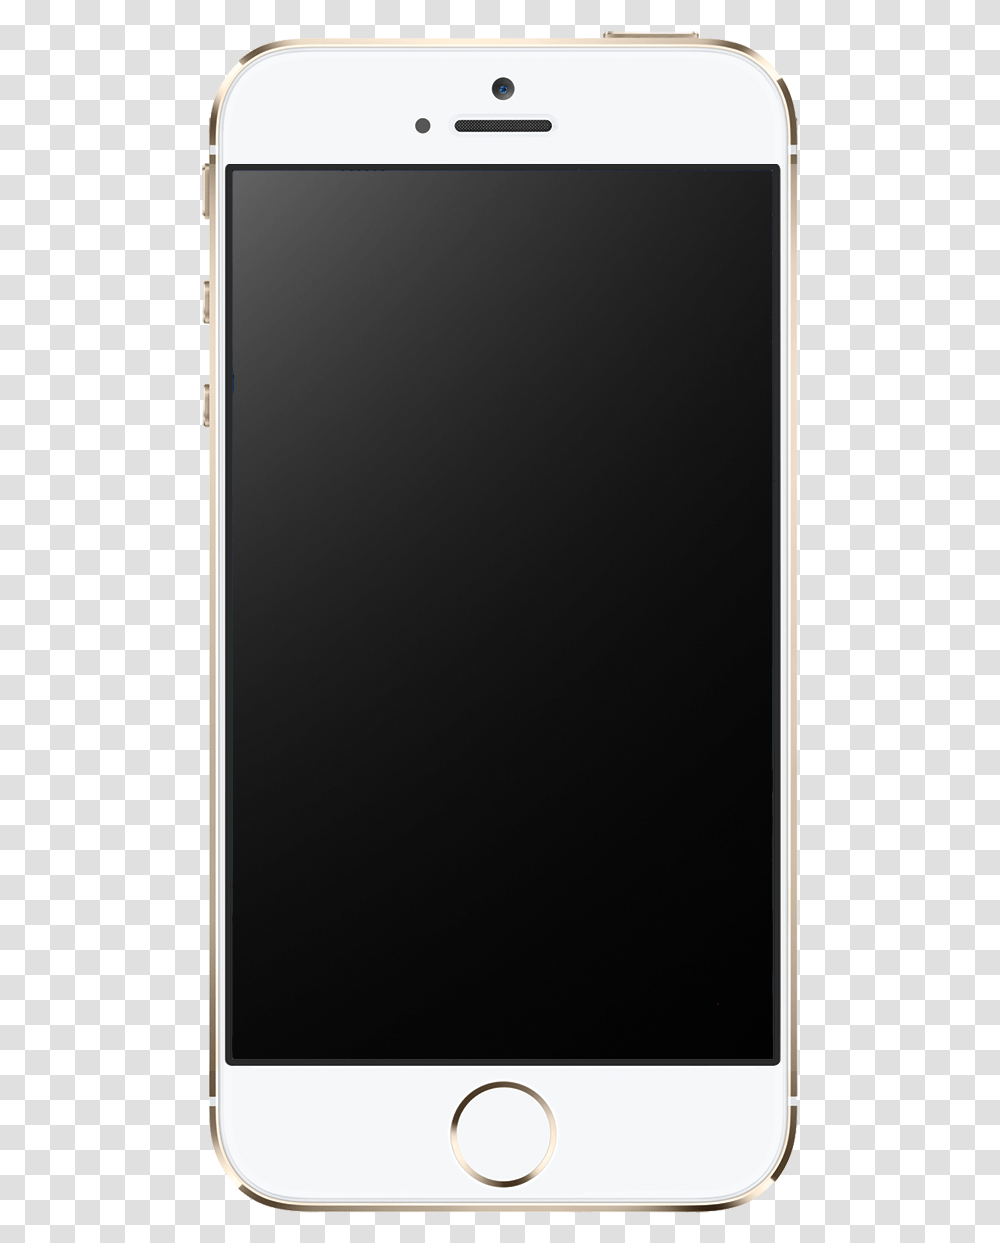 Iphone Apple Image Celular Em Iphone, Mobile Phone, Electronics, Cell Phone, Screen Transparent Png